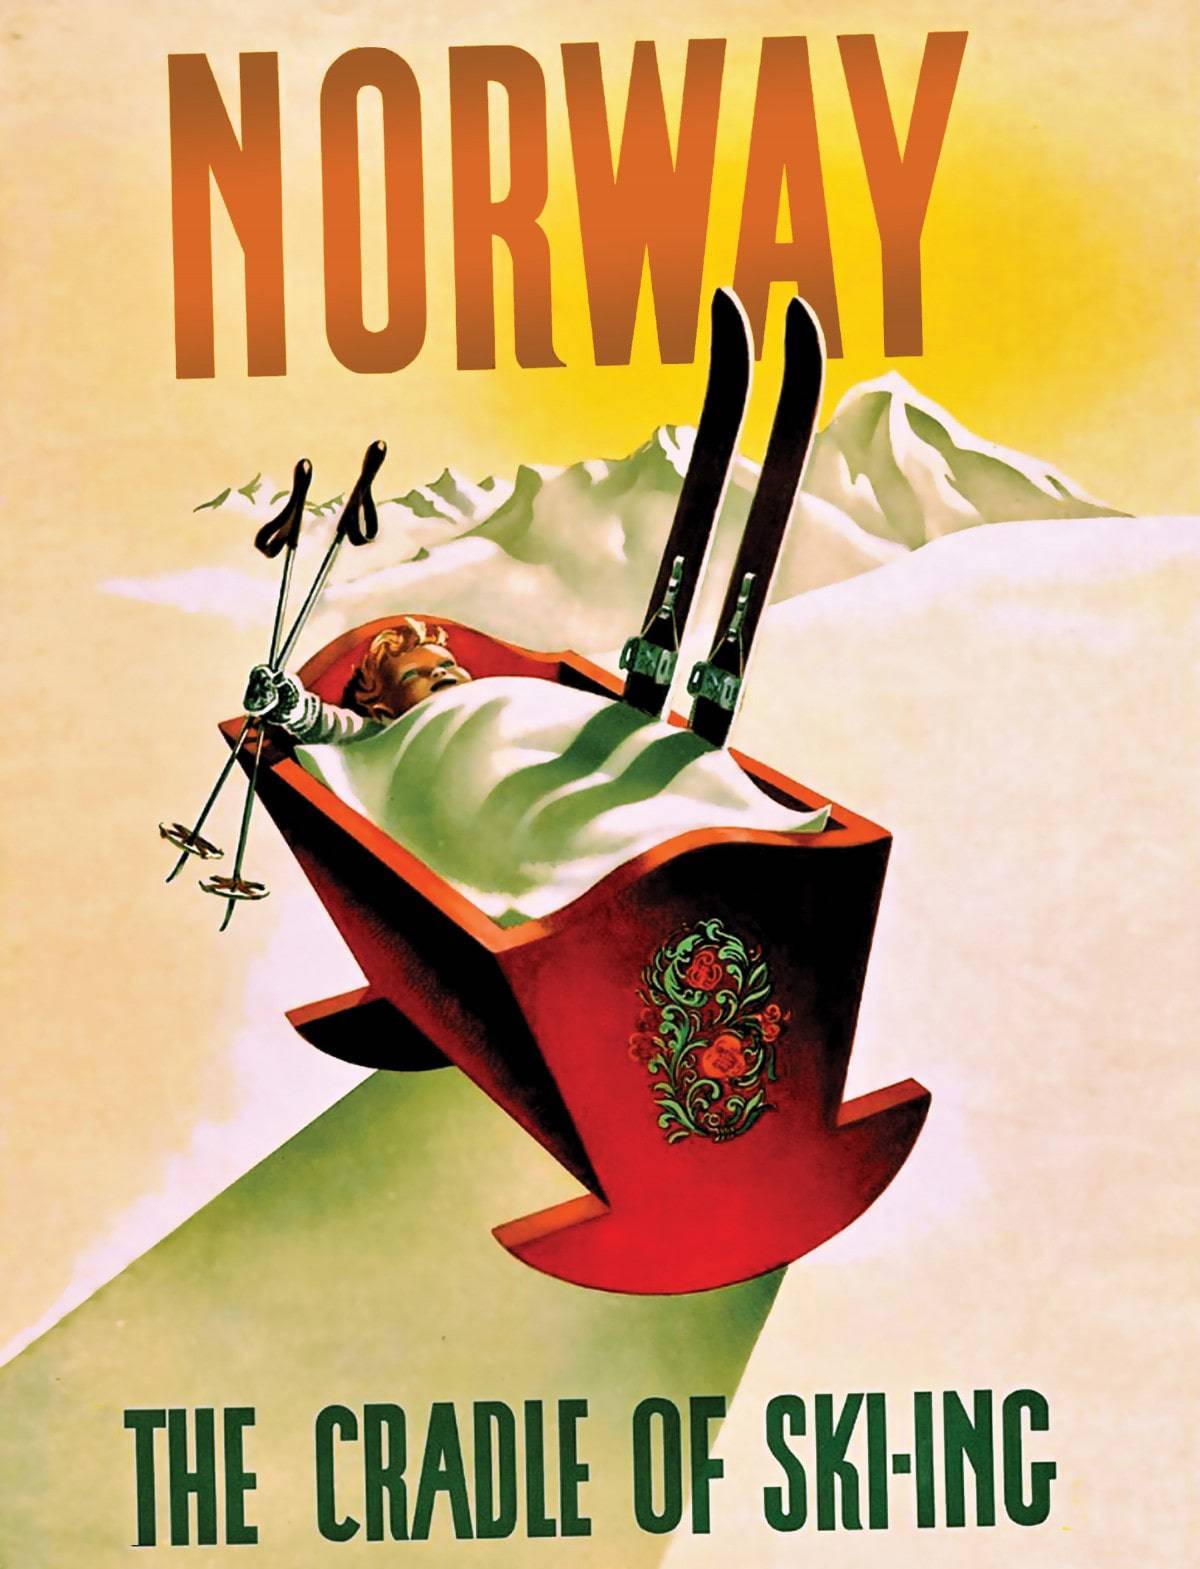 Norway the Cradle of Skiing - Powderaddicts